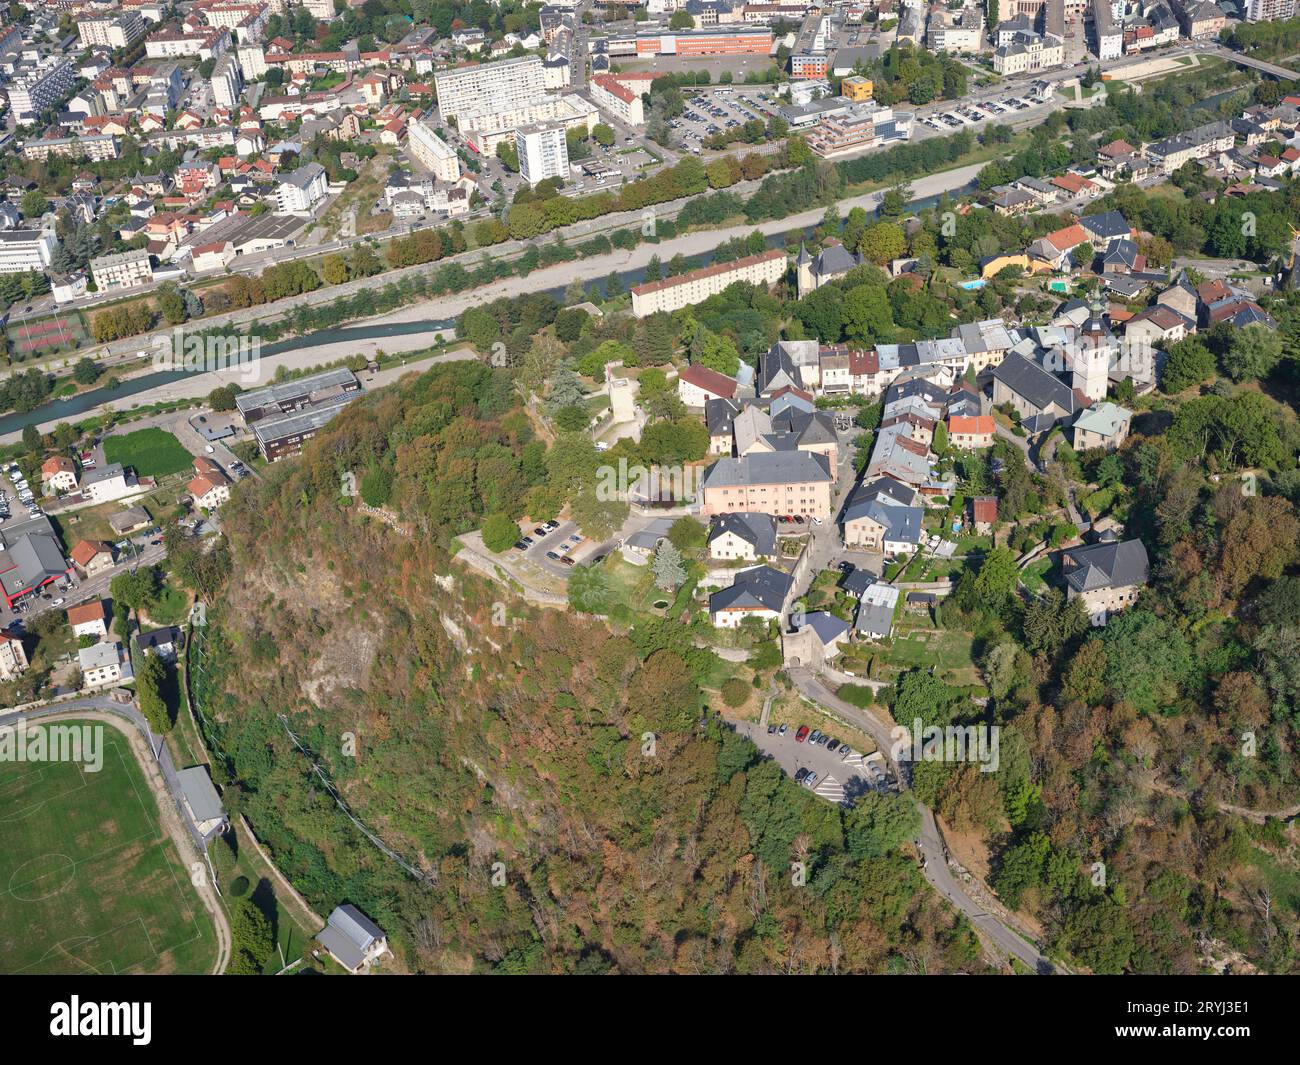 AERIAL VIEW. Medieval town of Conflans. Albertville, Savoie, Auvergne-Rhône-Alpes, France. Stock Photo